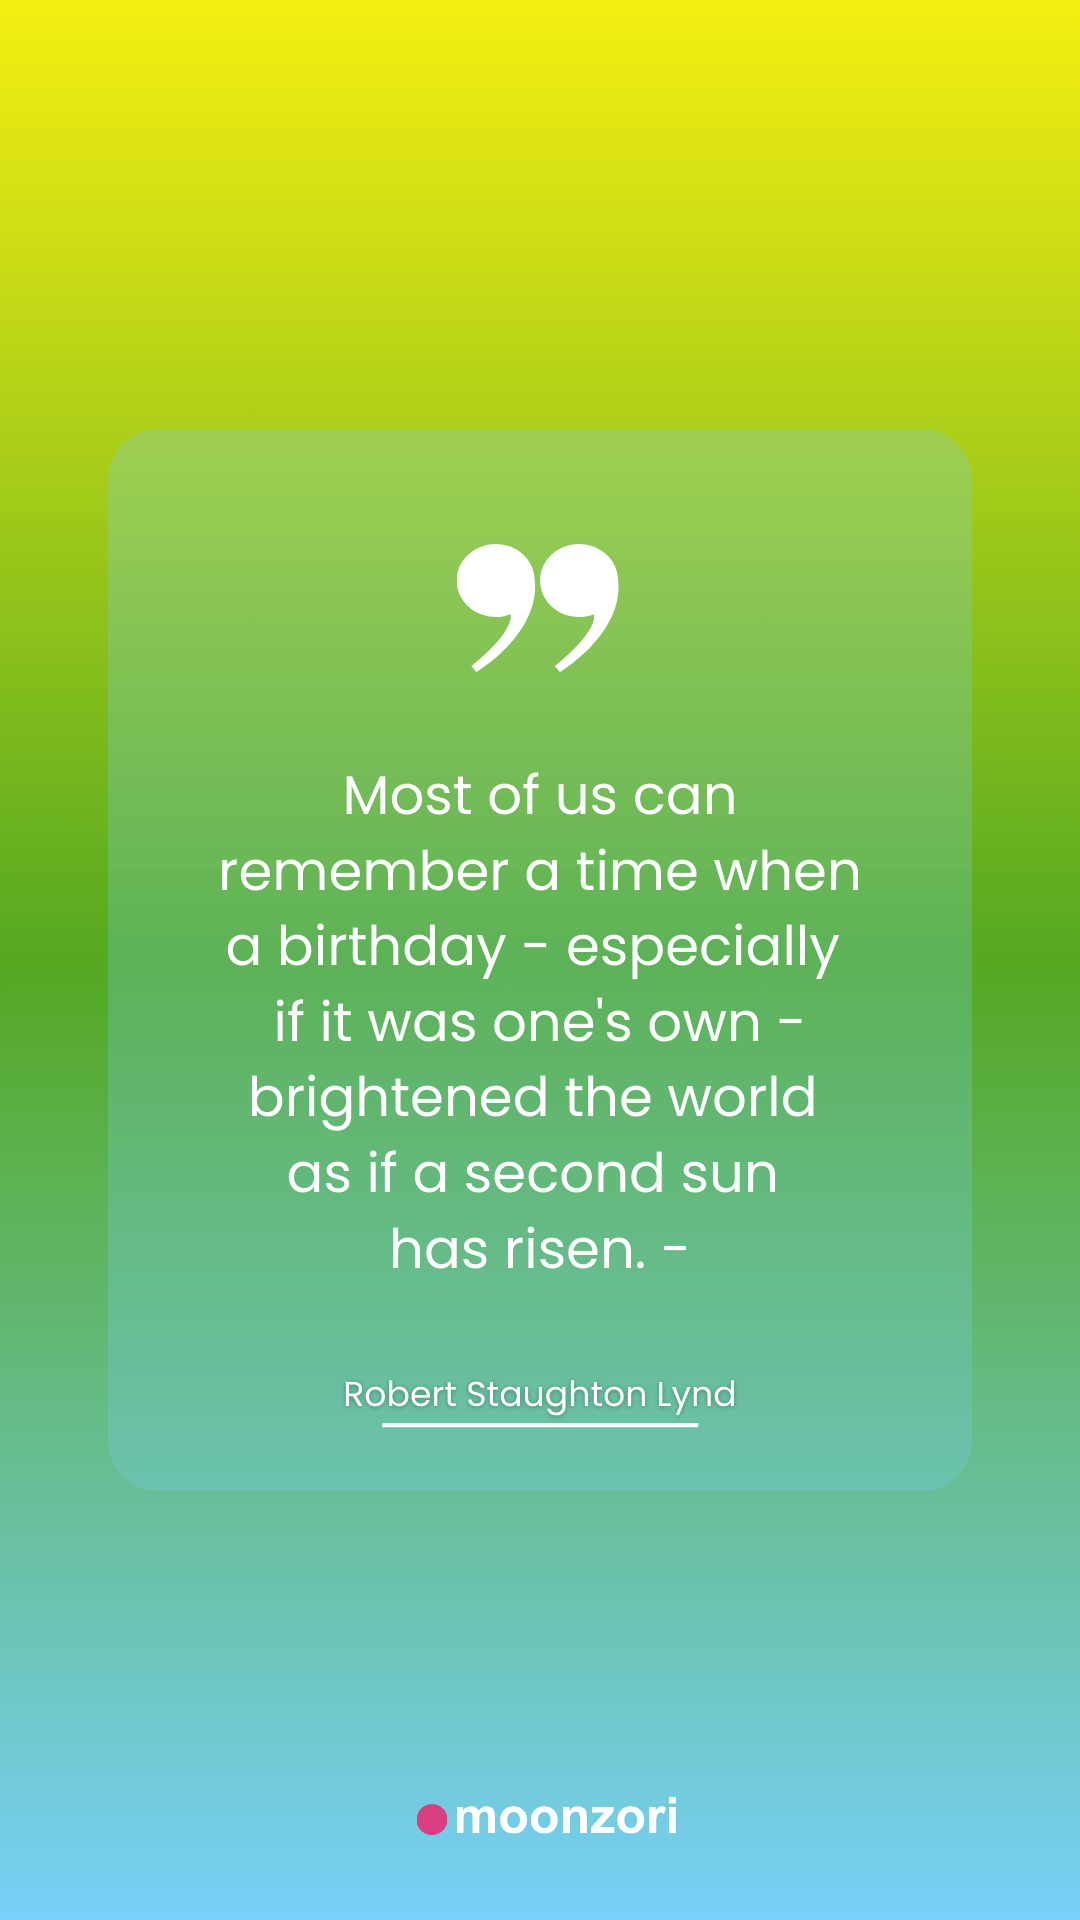 Birthday Quote of Robert Staughton Lynd - Moonzori Quotes